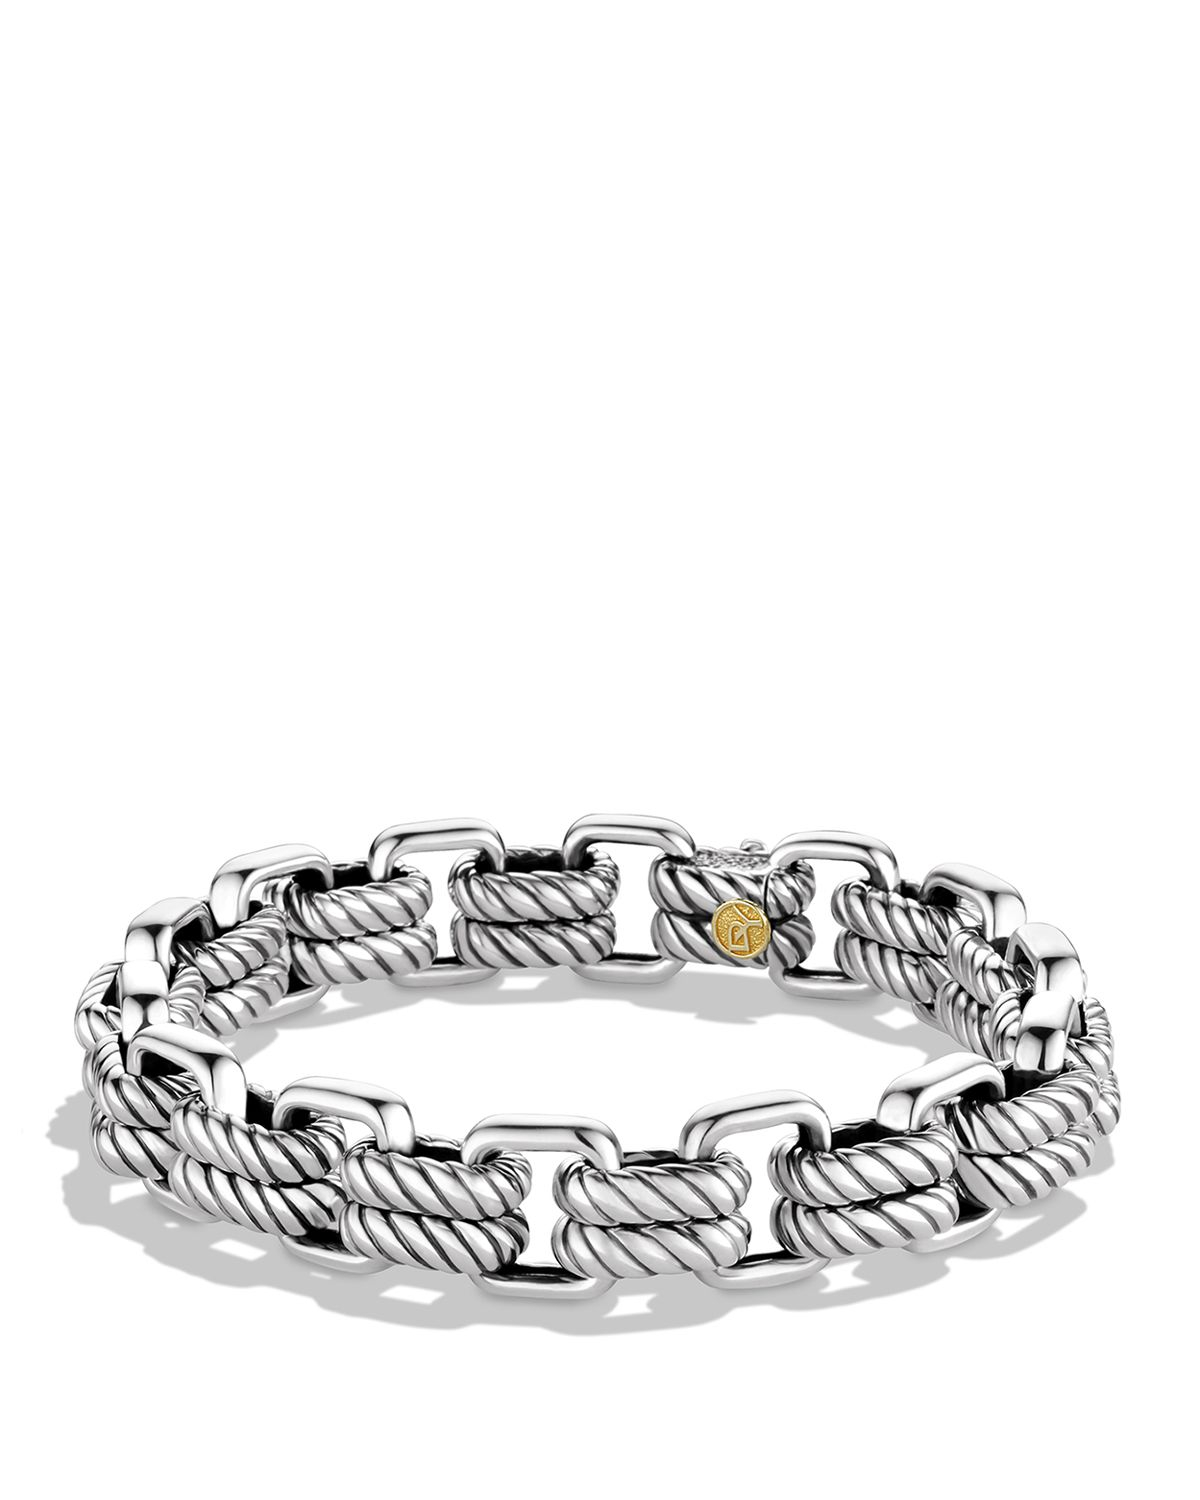 David yurman Empire Link Bracelet With Gold in Metallic for Men | Lyst